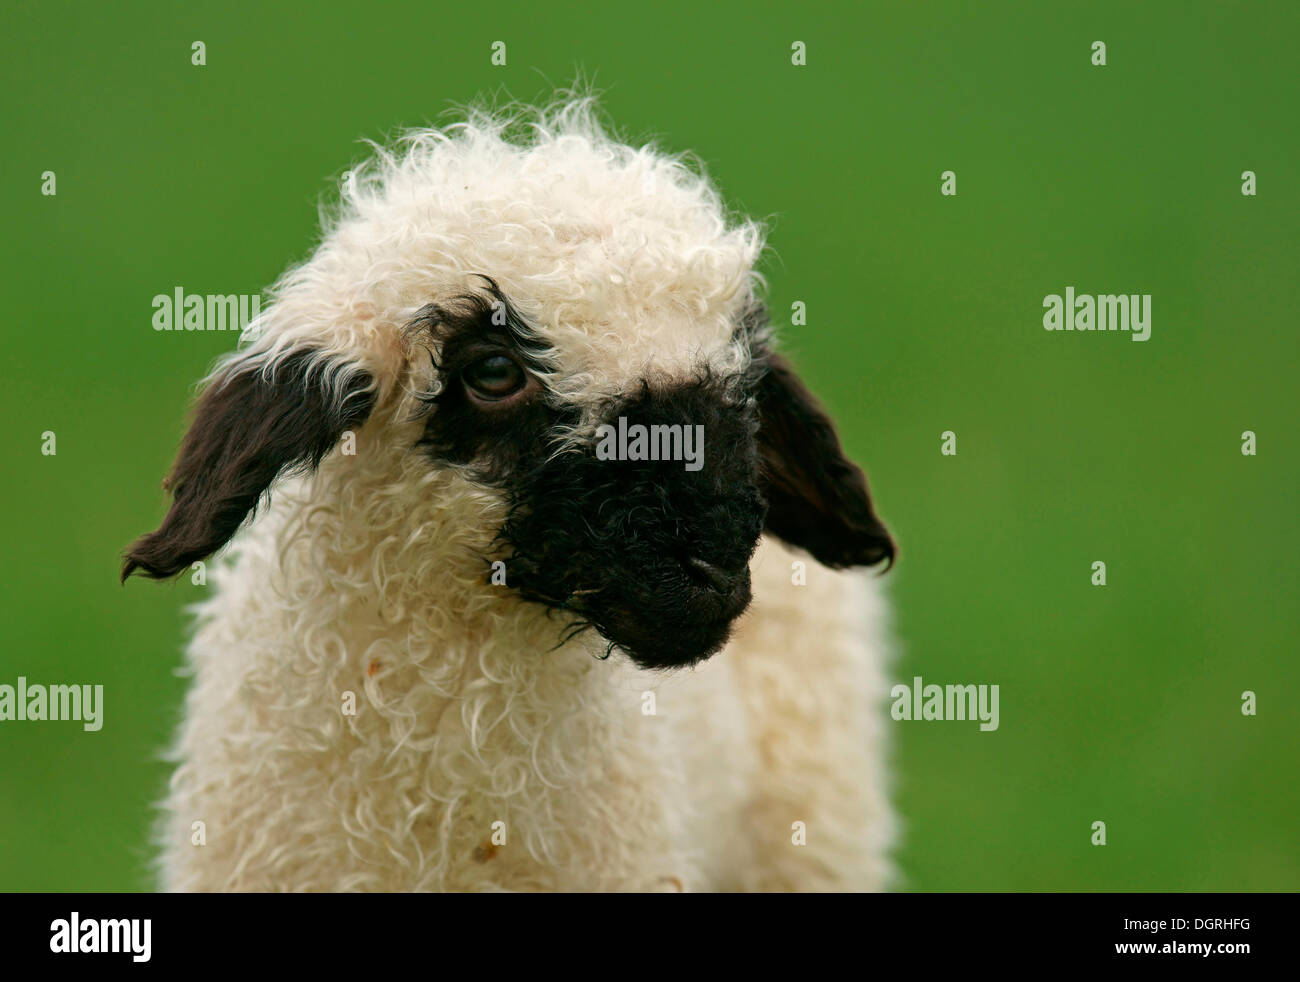 Valais Blacknose sheep (Ovis orientalis aries), lamb, Bad Hersfeld, Hesse, Germany Stock Photo